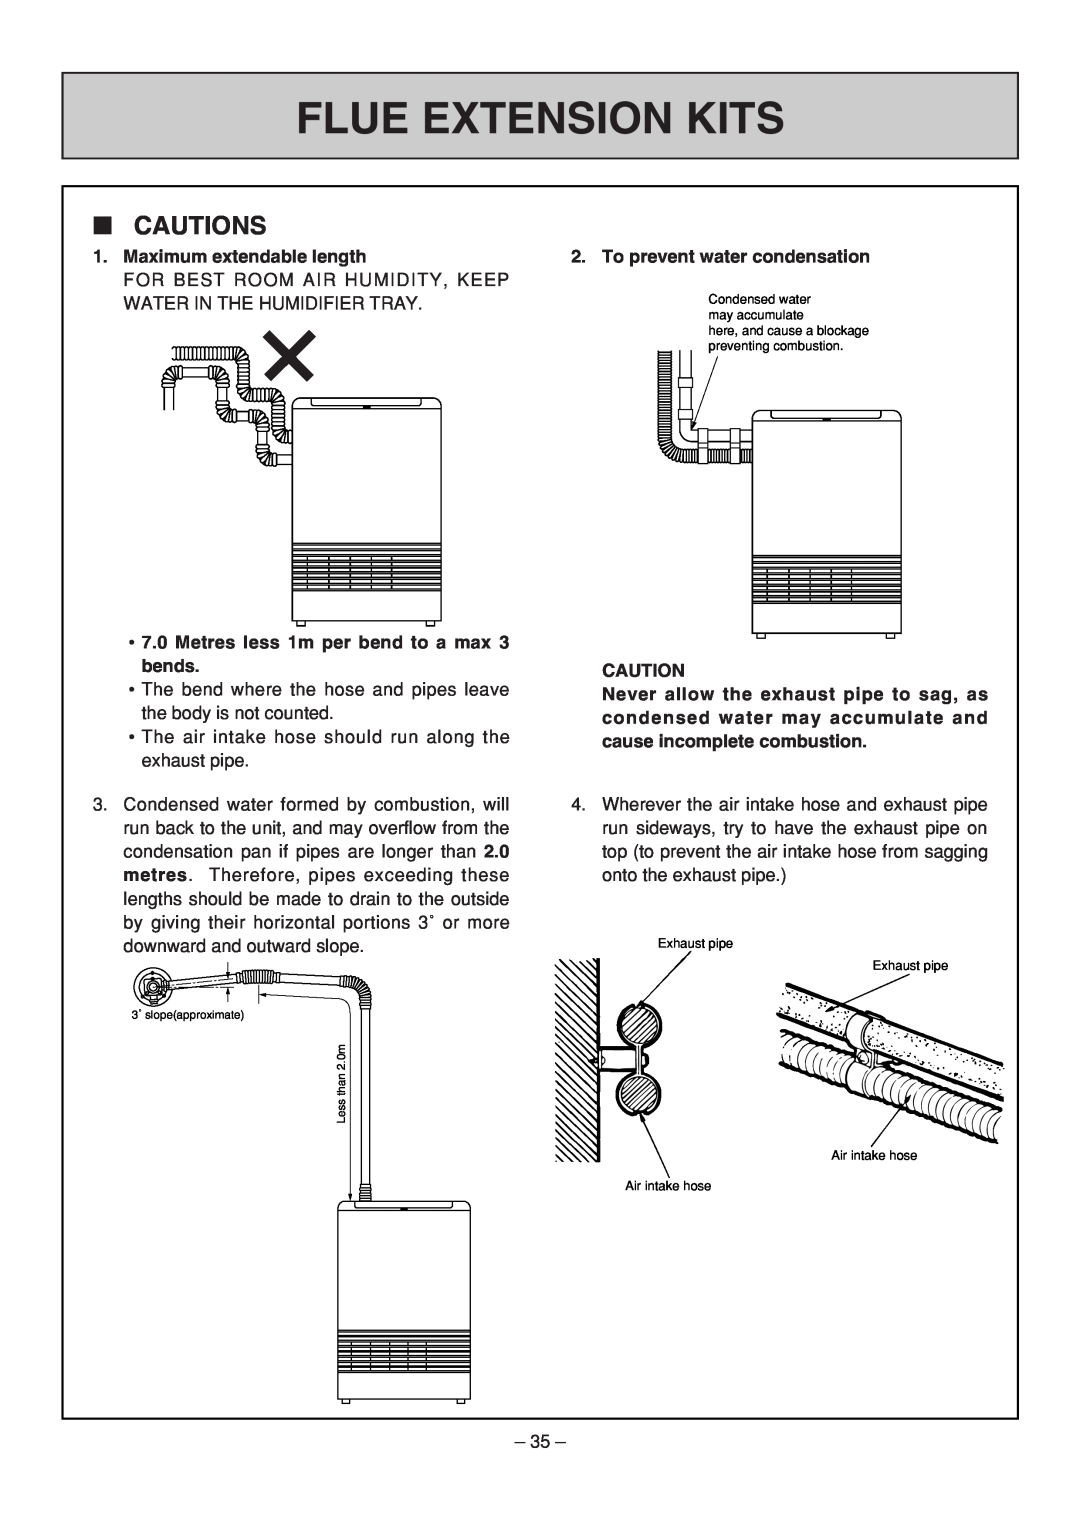 Rinnai RHFE-308 FTR Cautions, Flue Extension Kits, Maximum extendable length, Metres less 1m per bend to a max 3 bends 